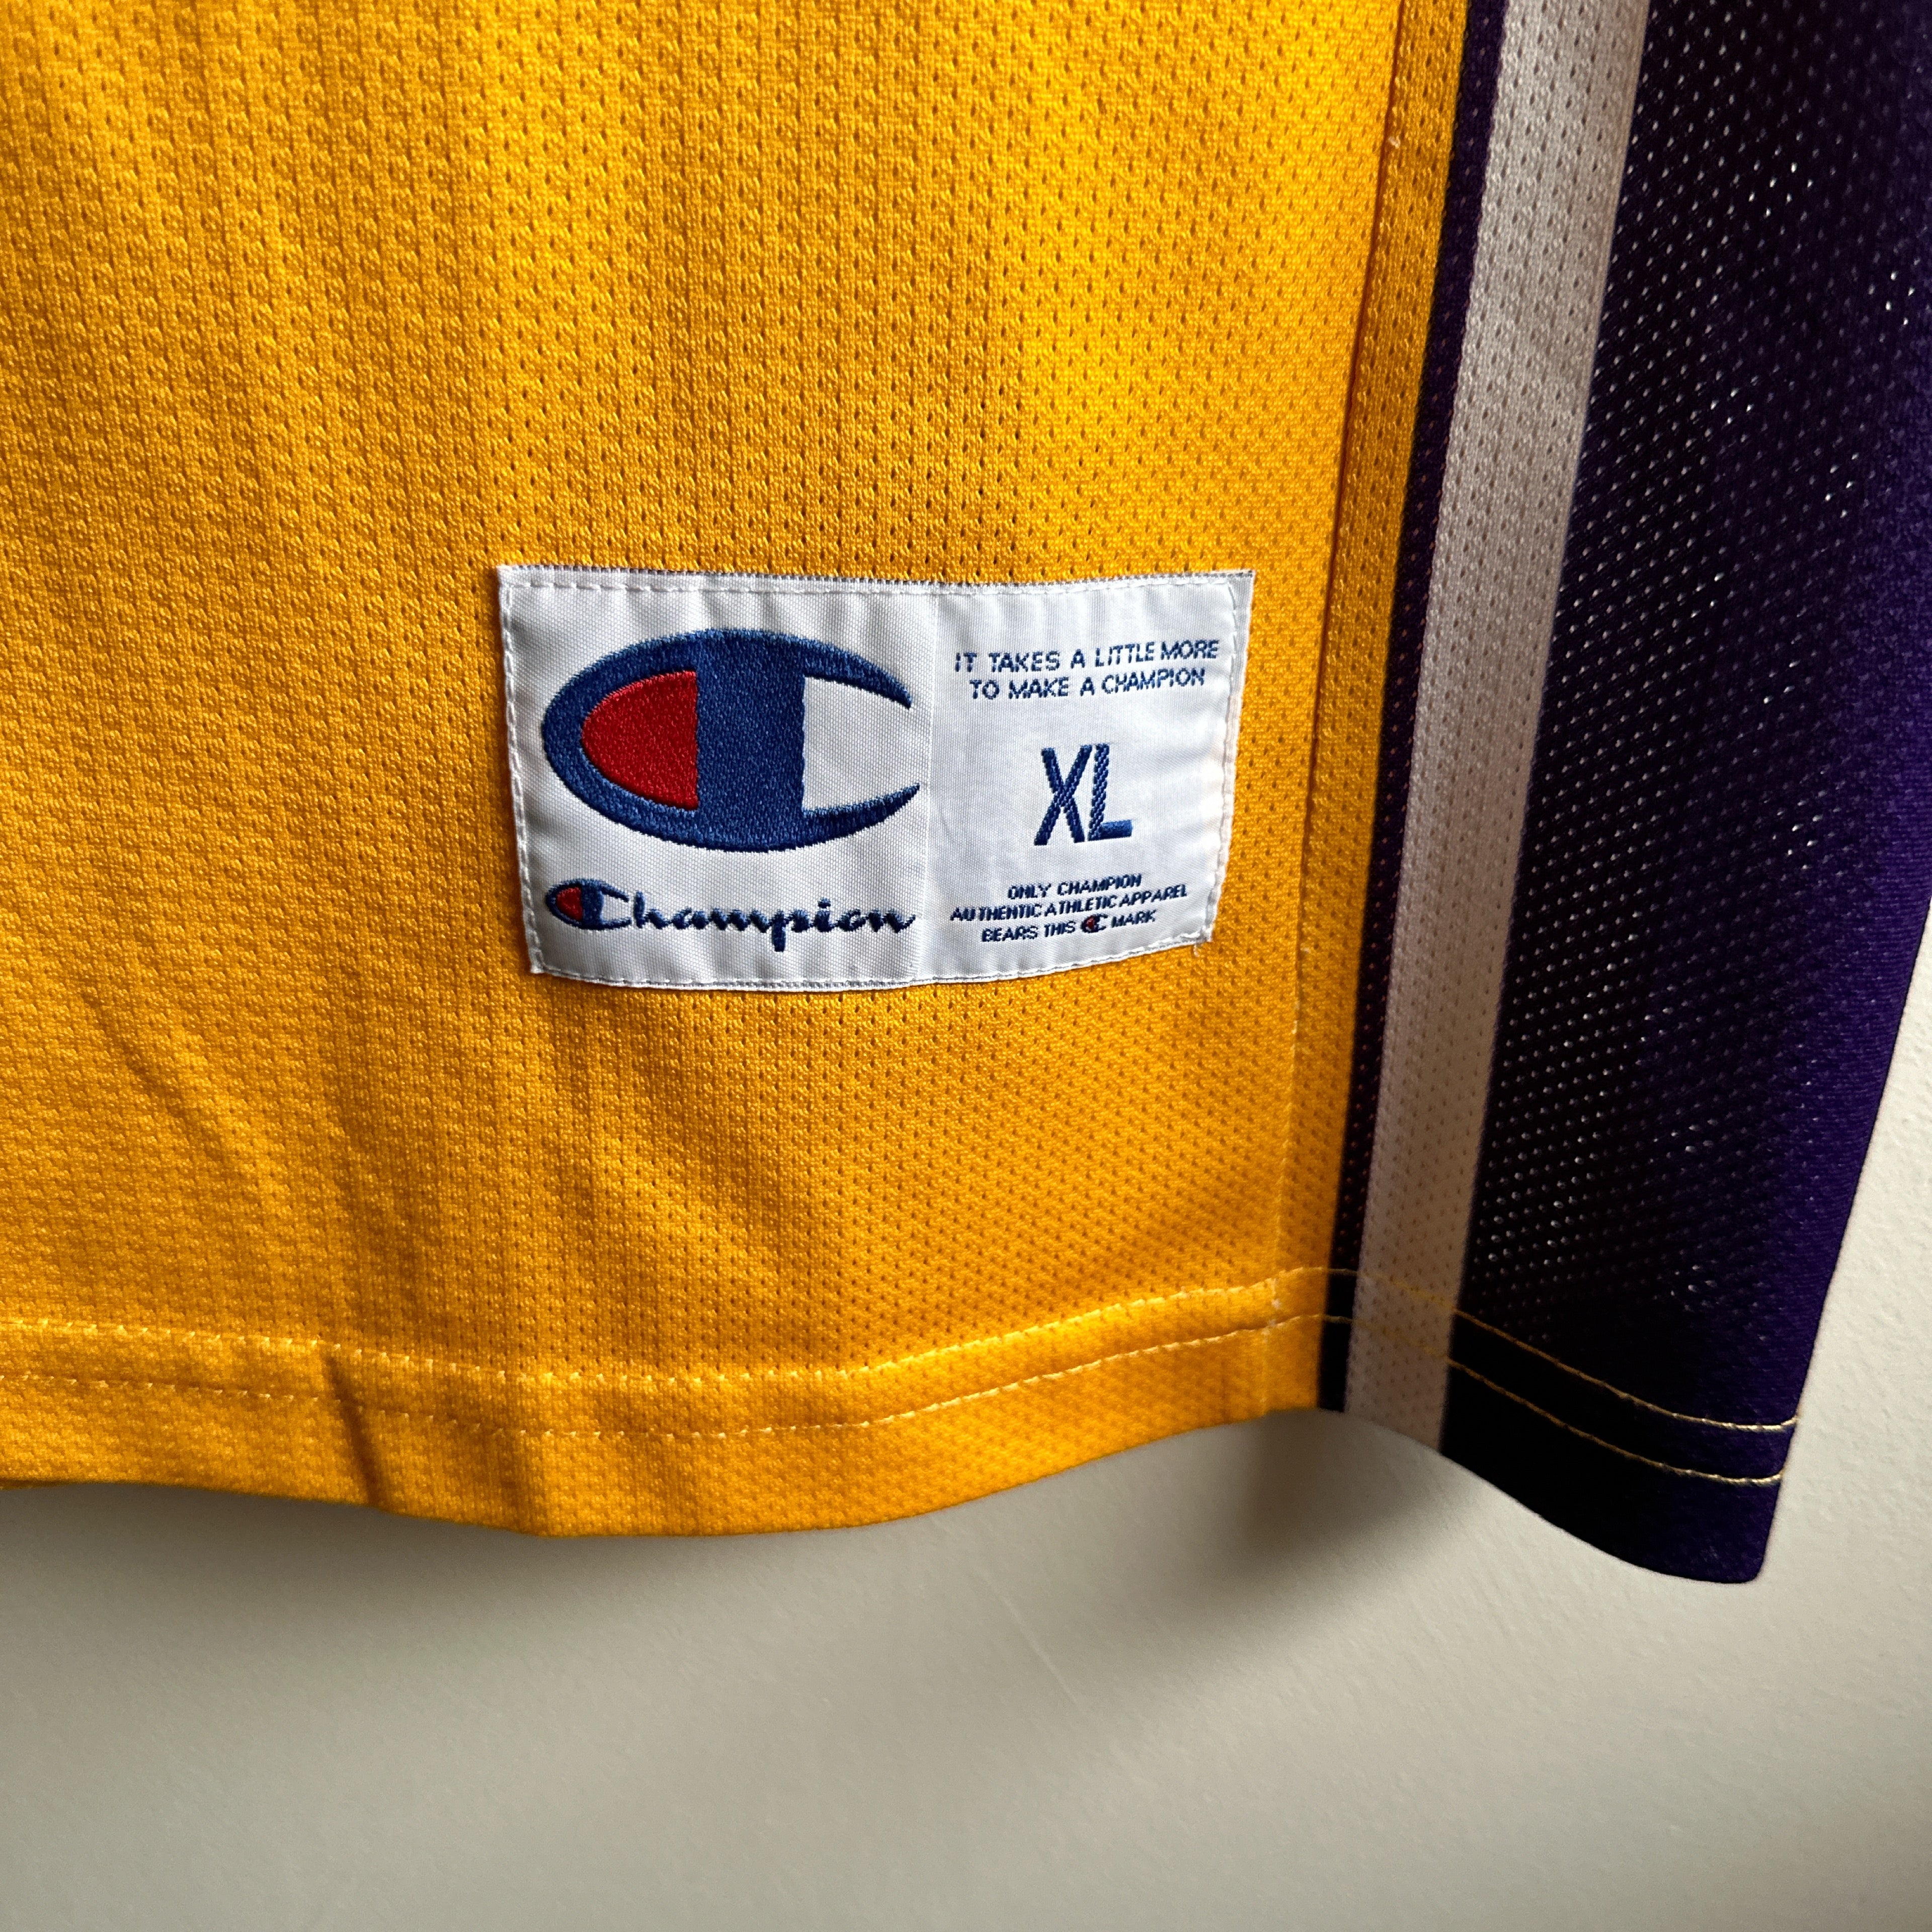 Los Angeles Lakers Pau Gasol Champion jersey - XL